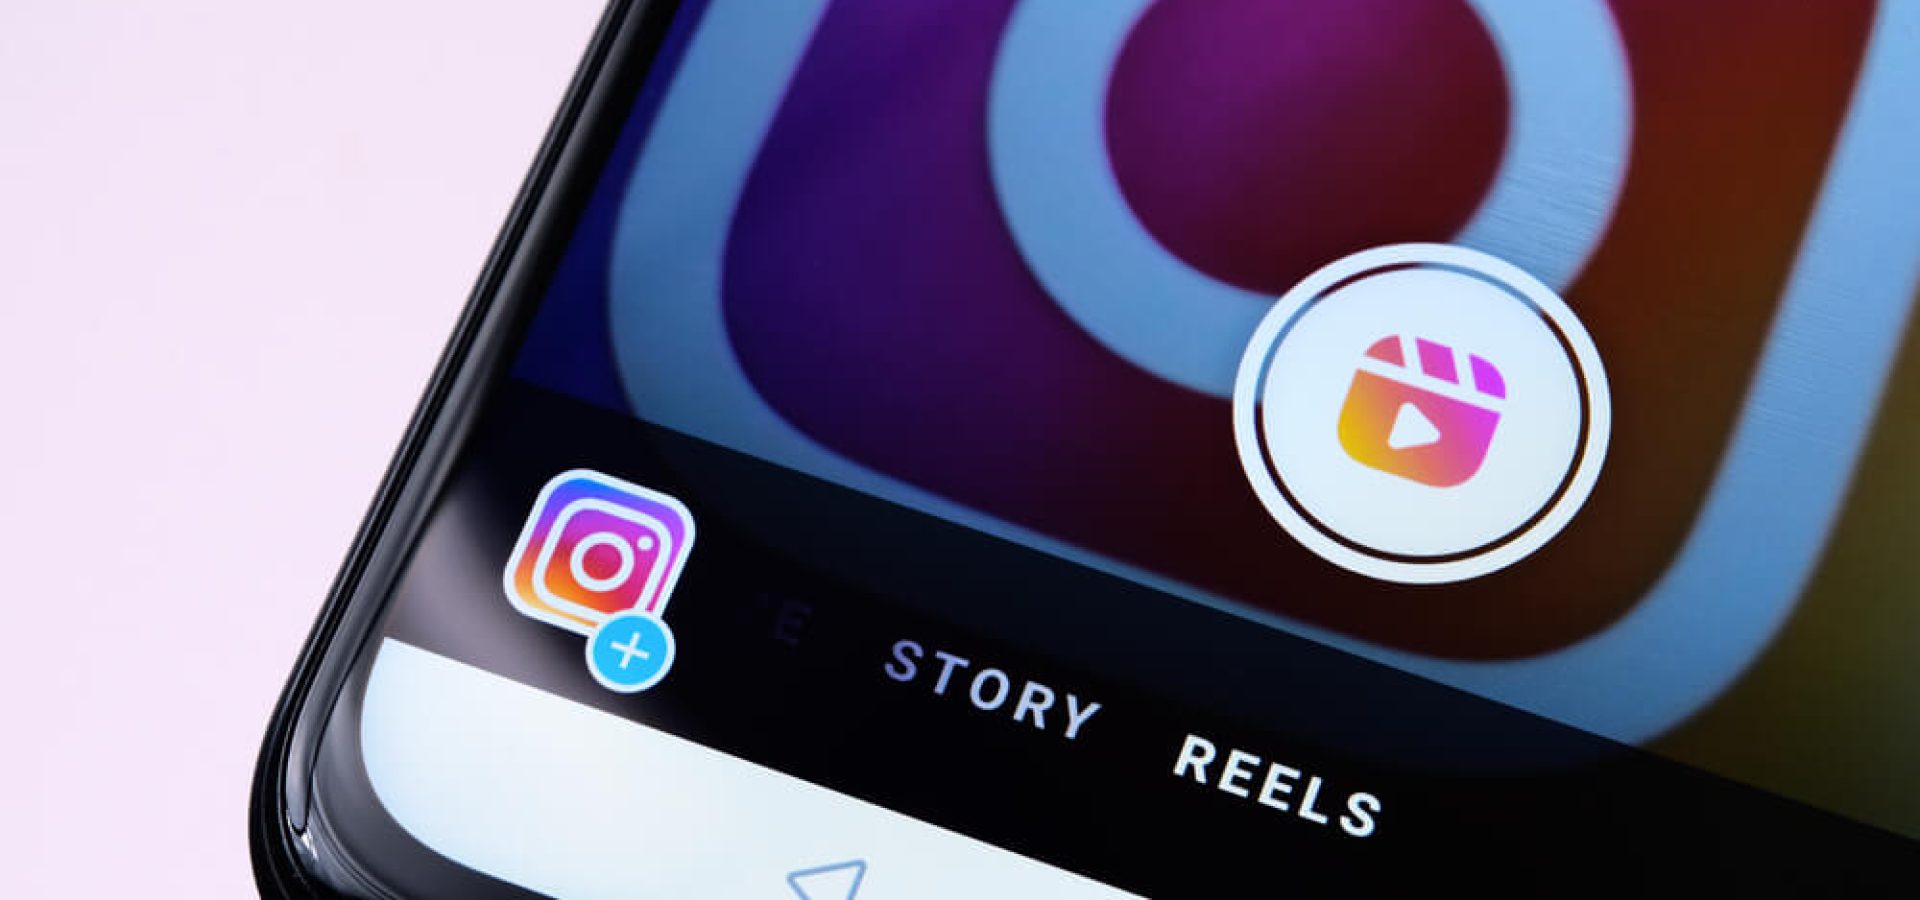 Instagram Reeks on Instagram app